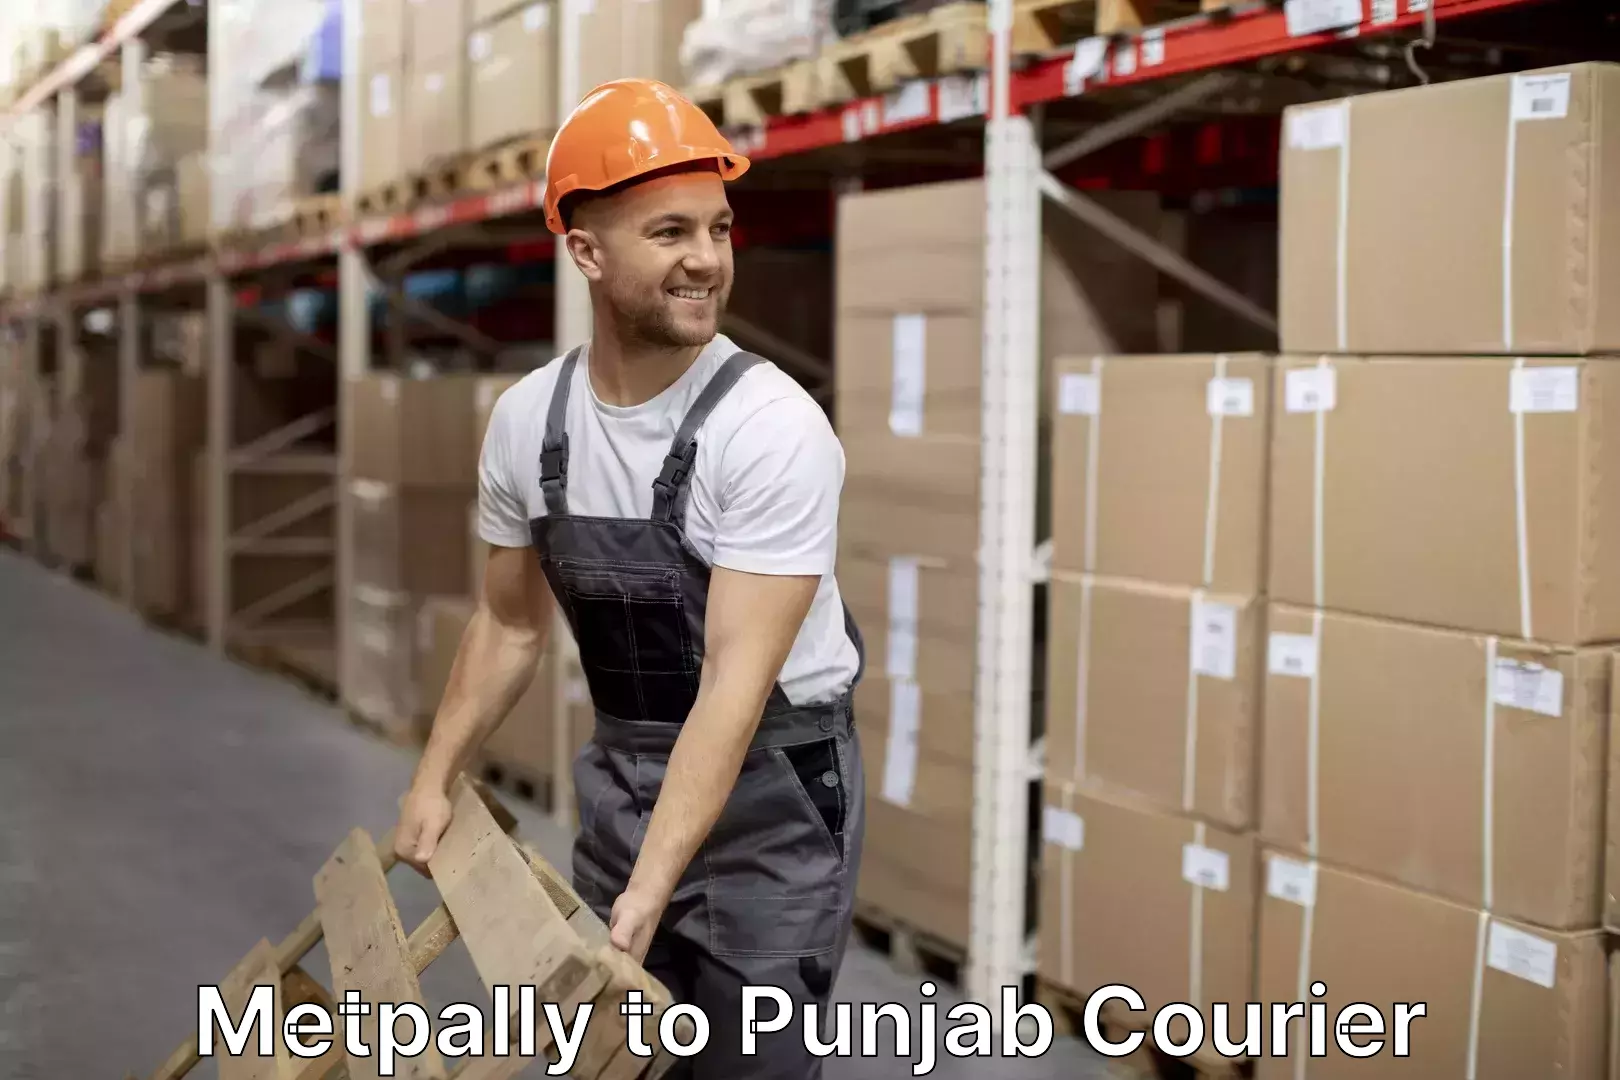 Professional moving company Metpally to Punjab